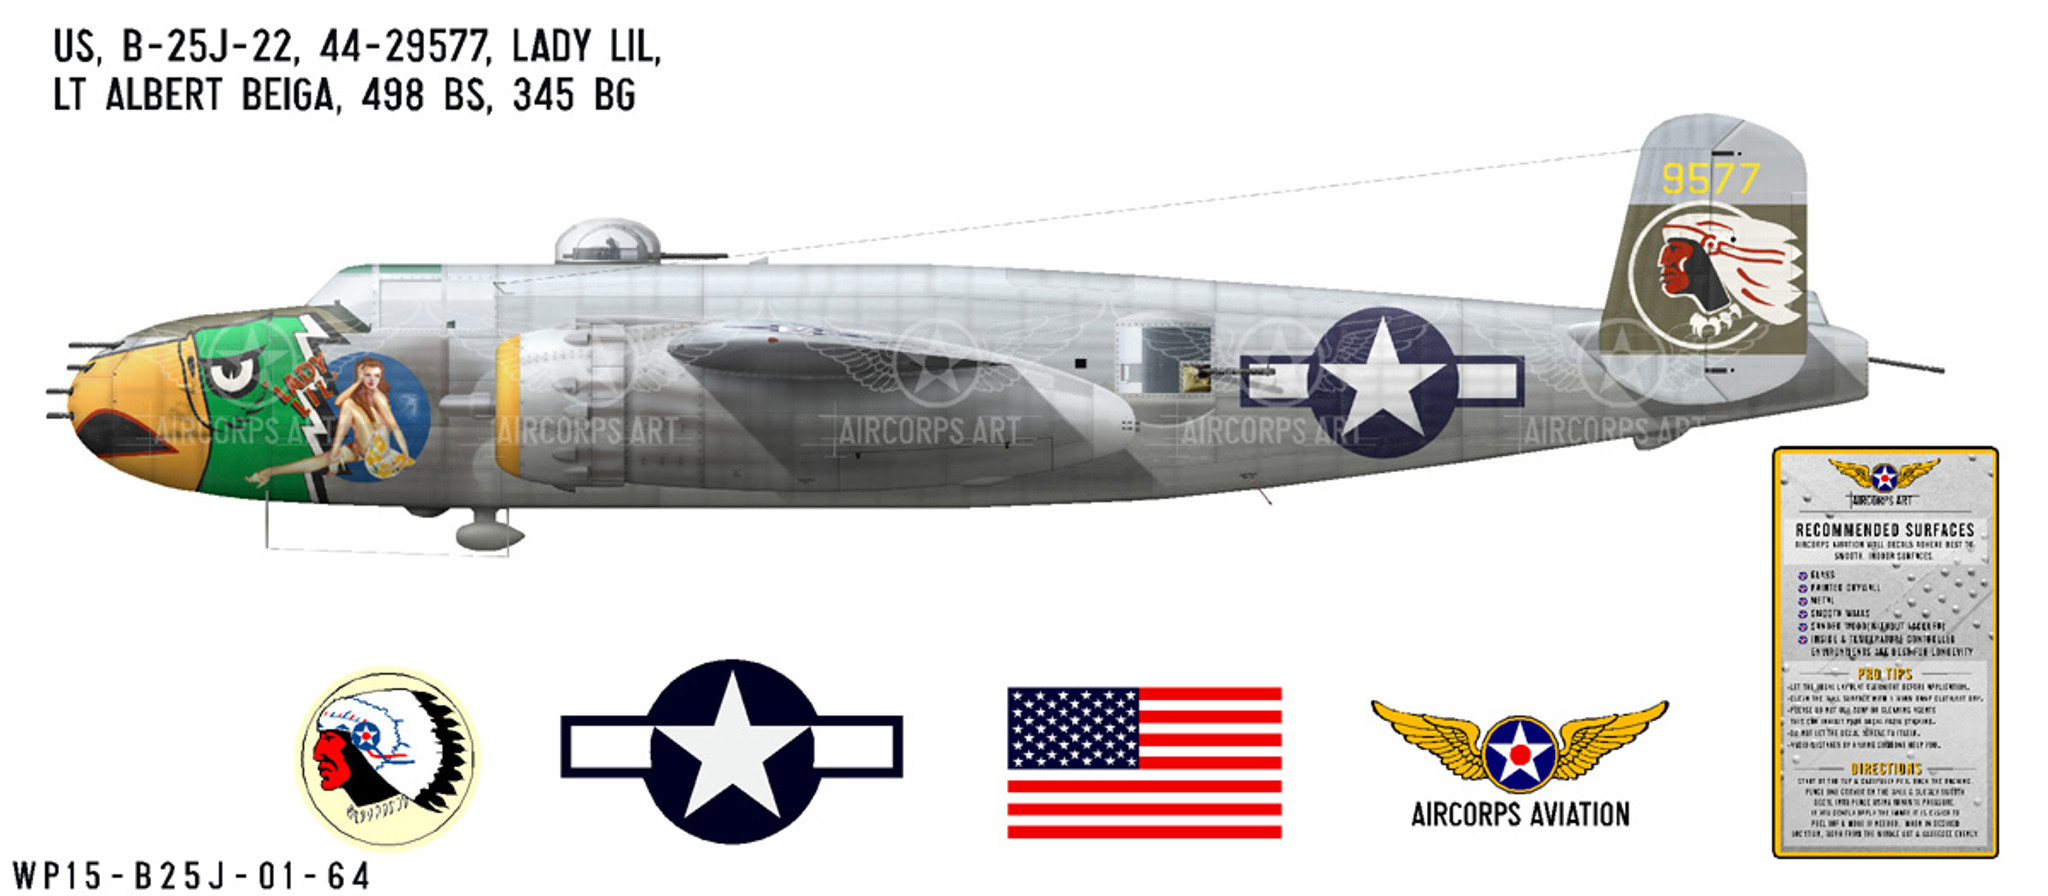 Military B-25 Mitchell. Lt. Bomber Airplane Jet Vintage Aviation Aircraft  Wall Decor Art Print Poster (16x20)